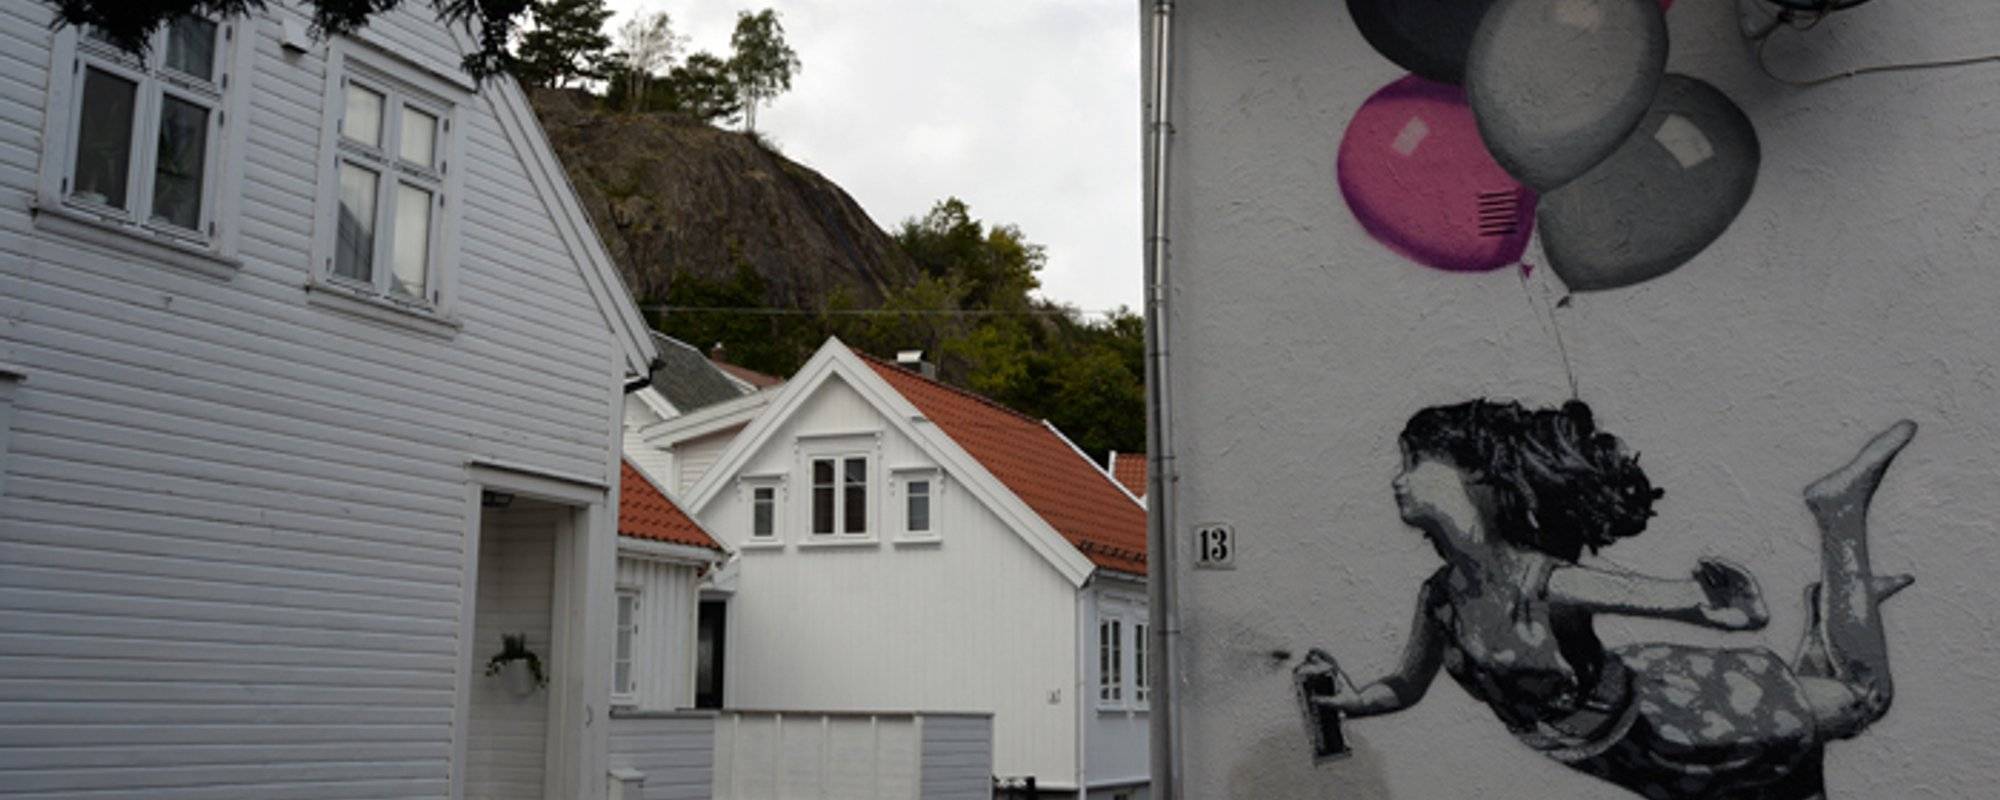 STREET ART #35 – Graffiti in the historical old town of Flekkefjord, Norway